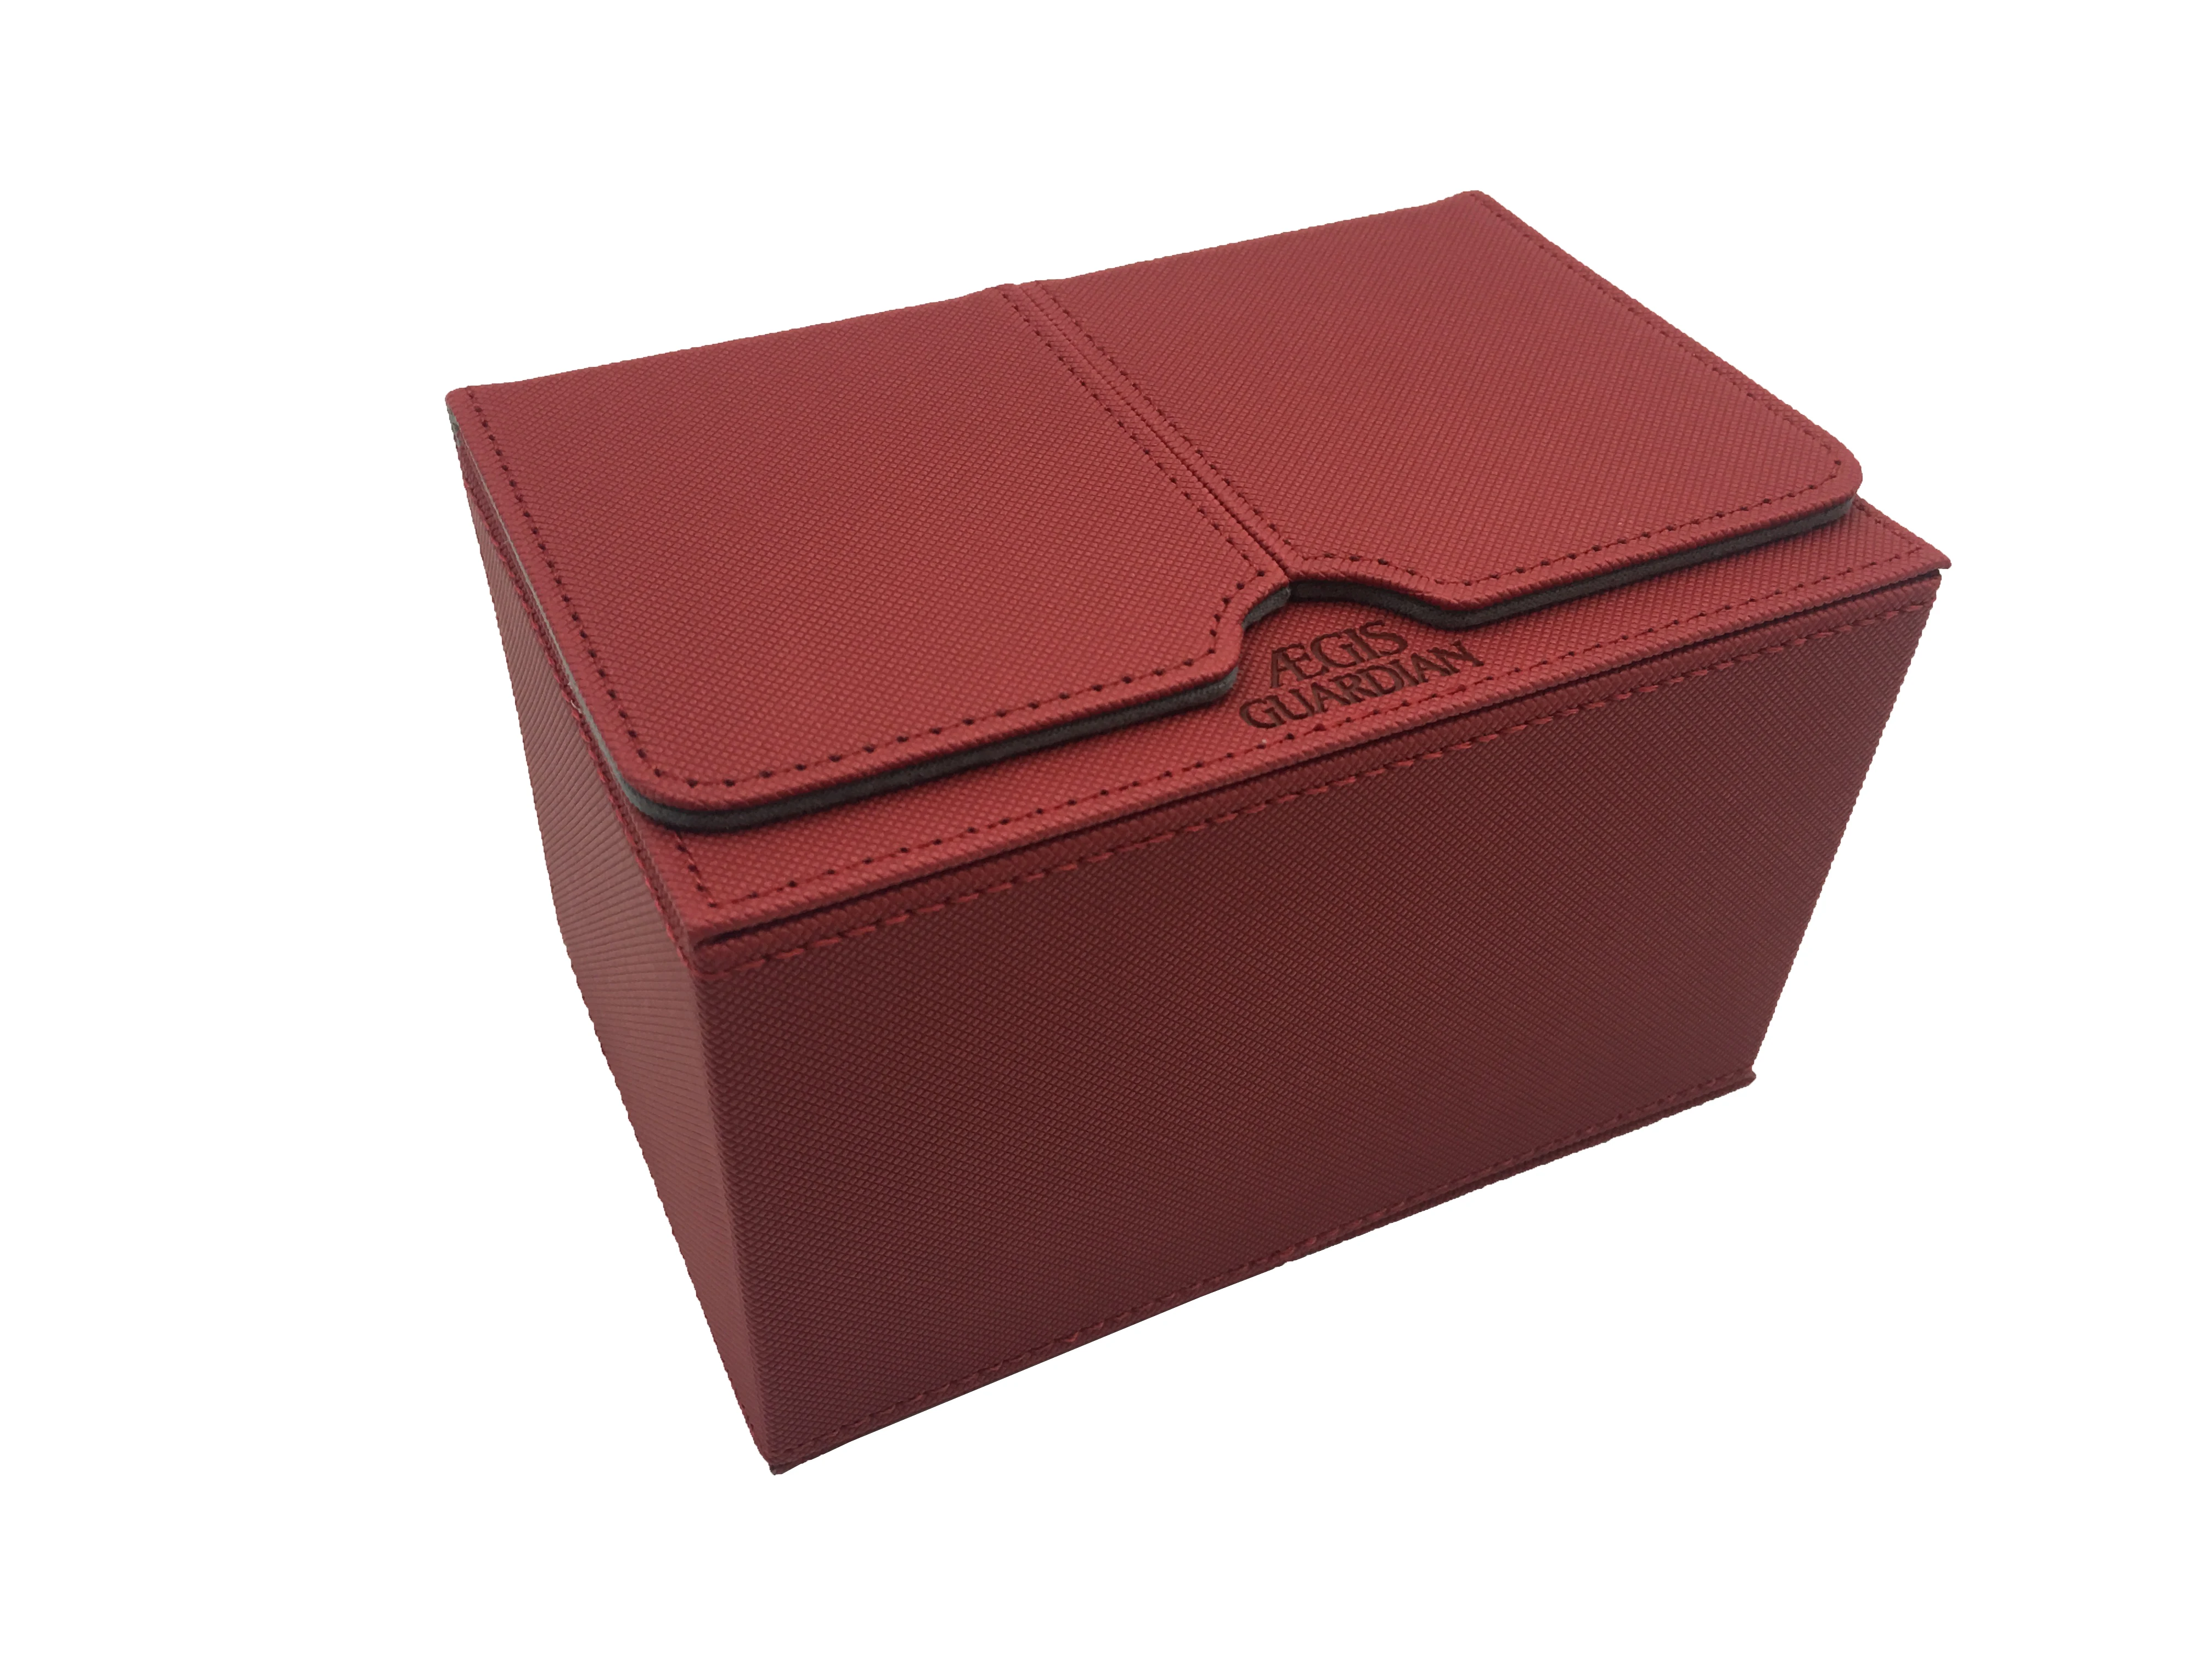 AEGIS GUARDIAN TCG Deck Case for Magic/Pokemon/YuGiOh Deck Box Card Holder: 160+  Red